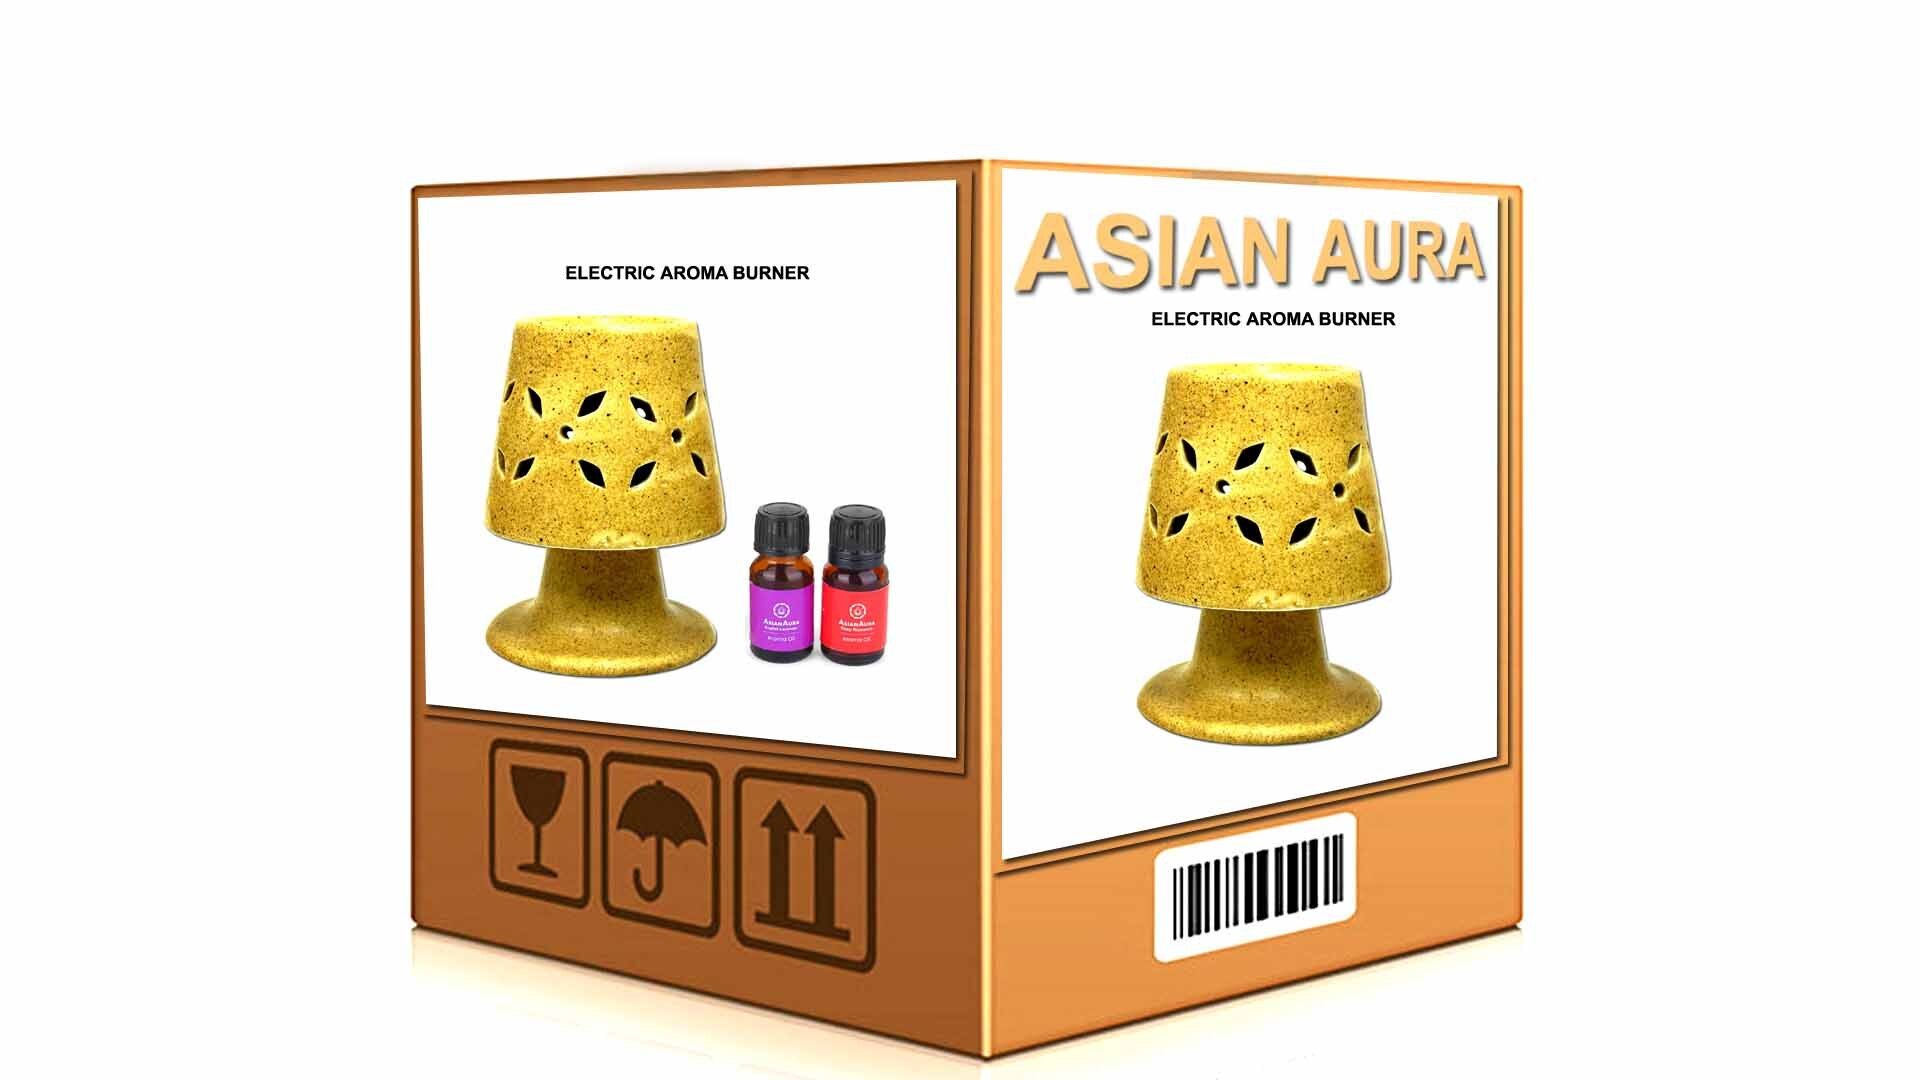 Asian Aura Ceramic Aromatic Oil Diffuser with 2 oil bottles AAEB 005-B